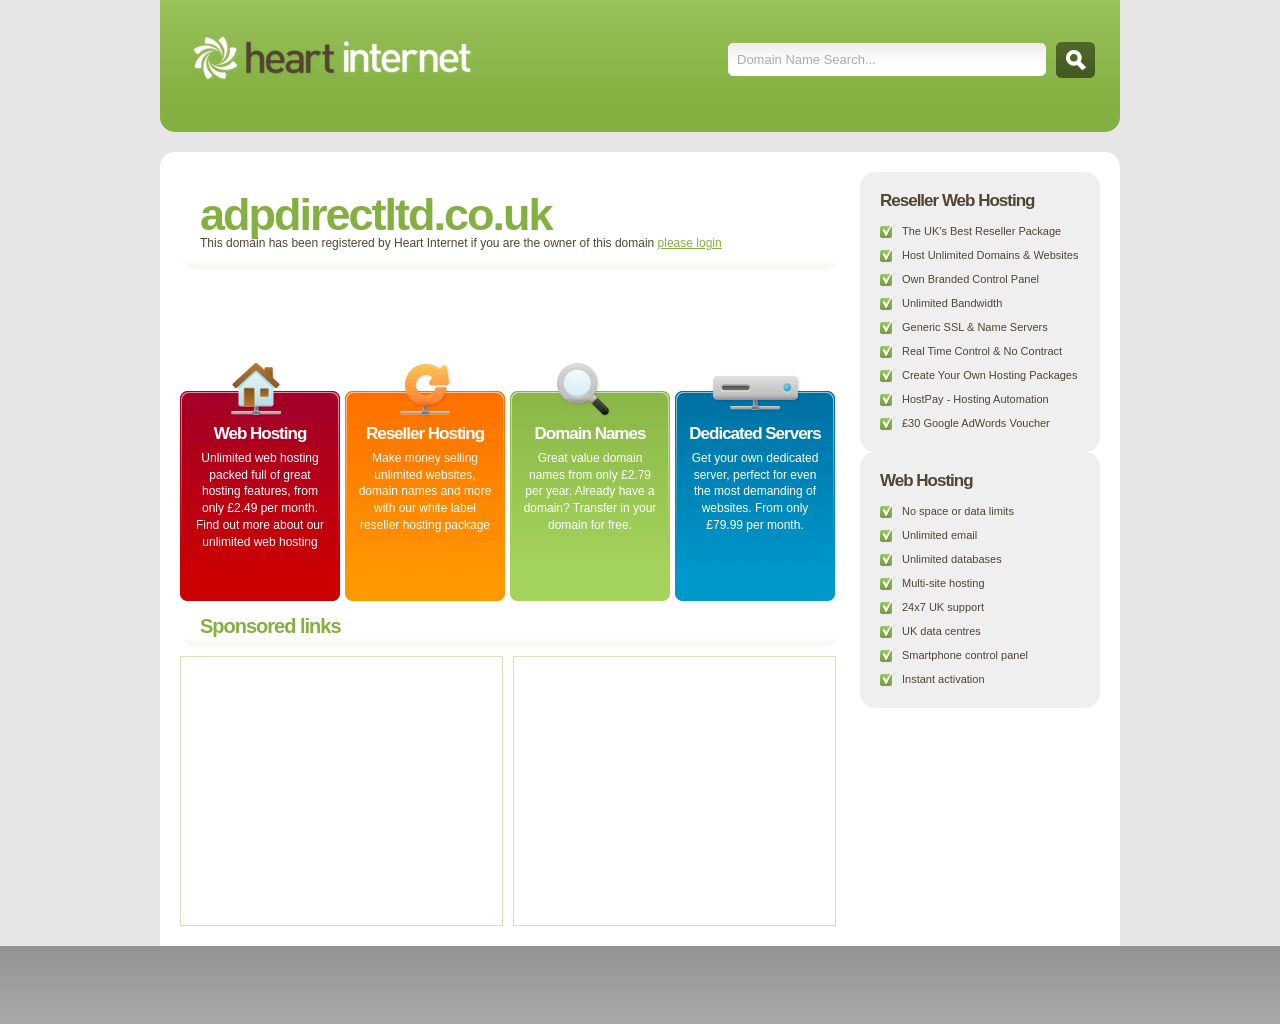 adpdirectltd.co.uk